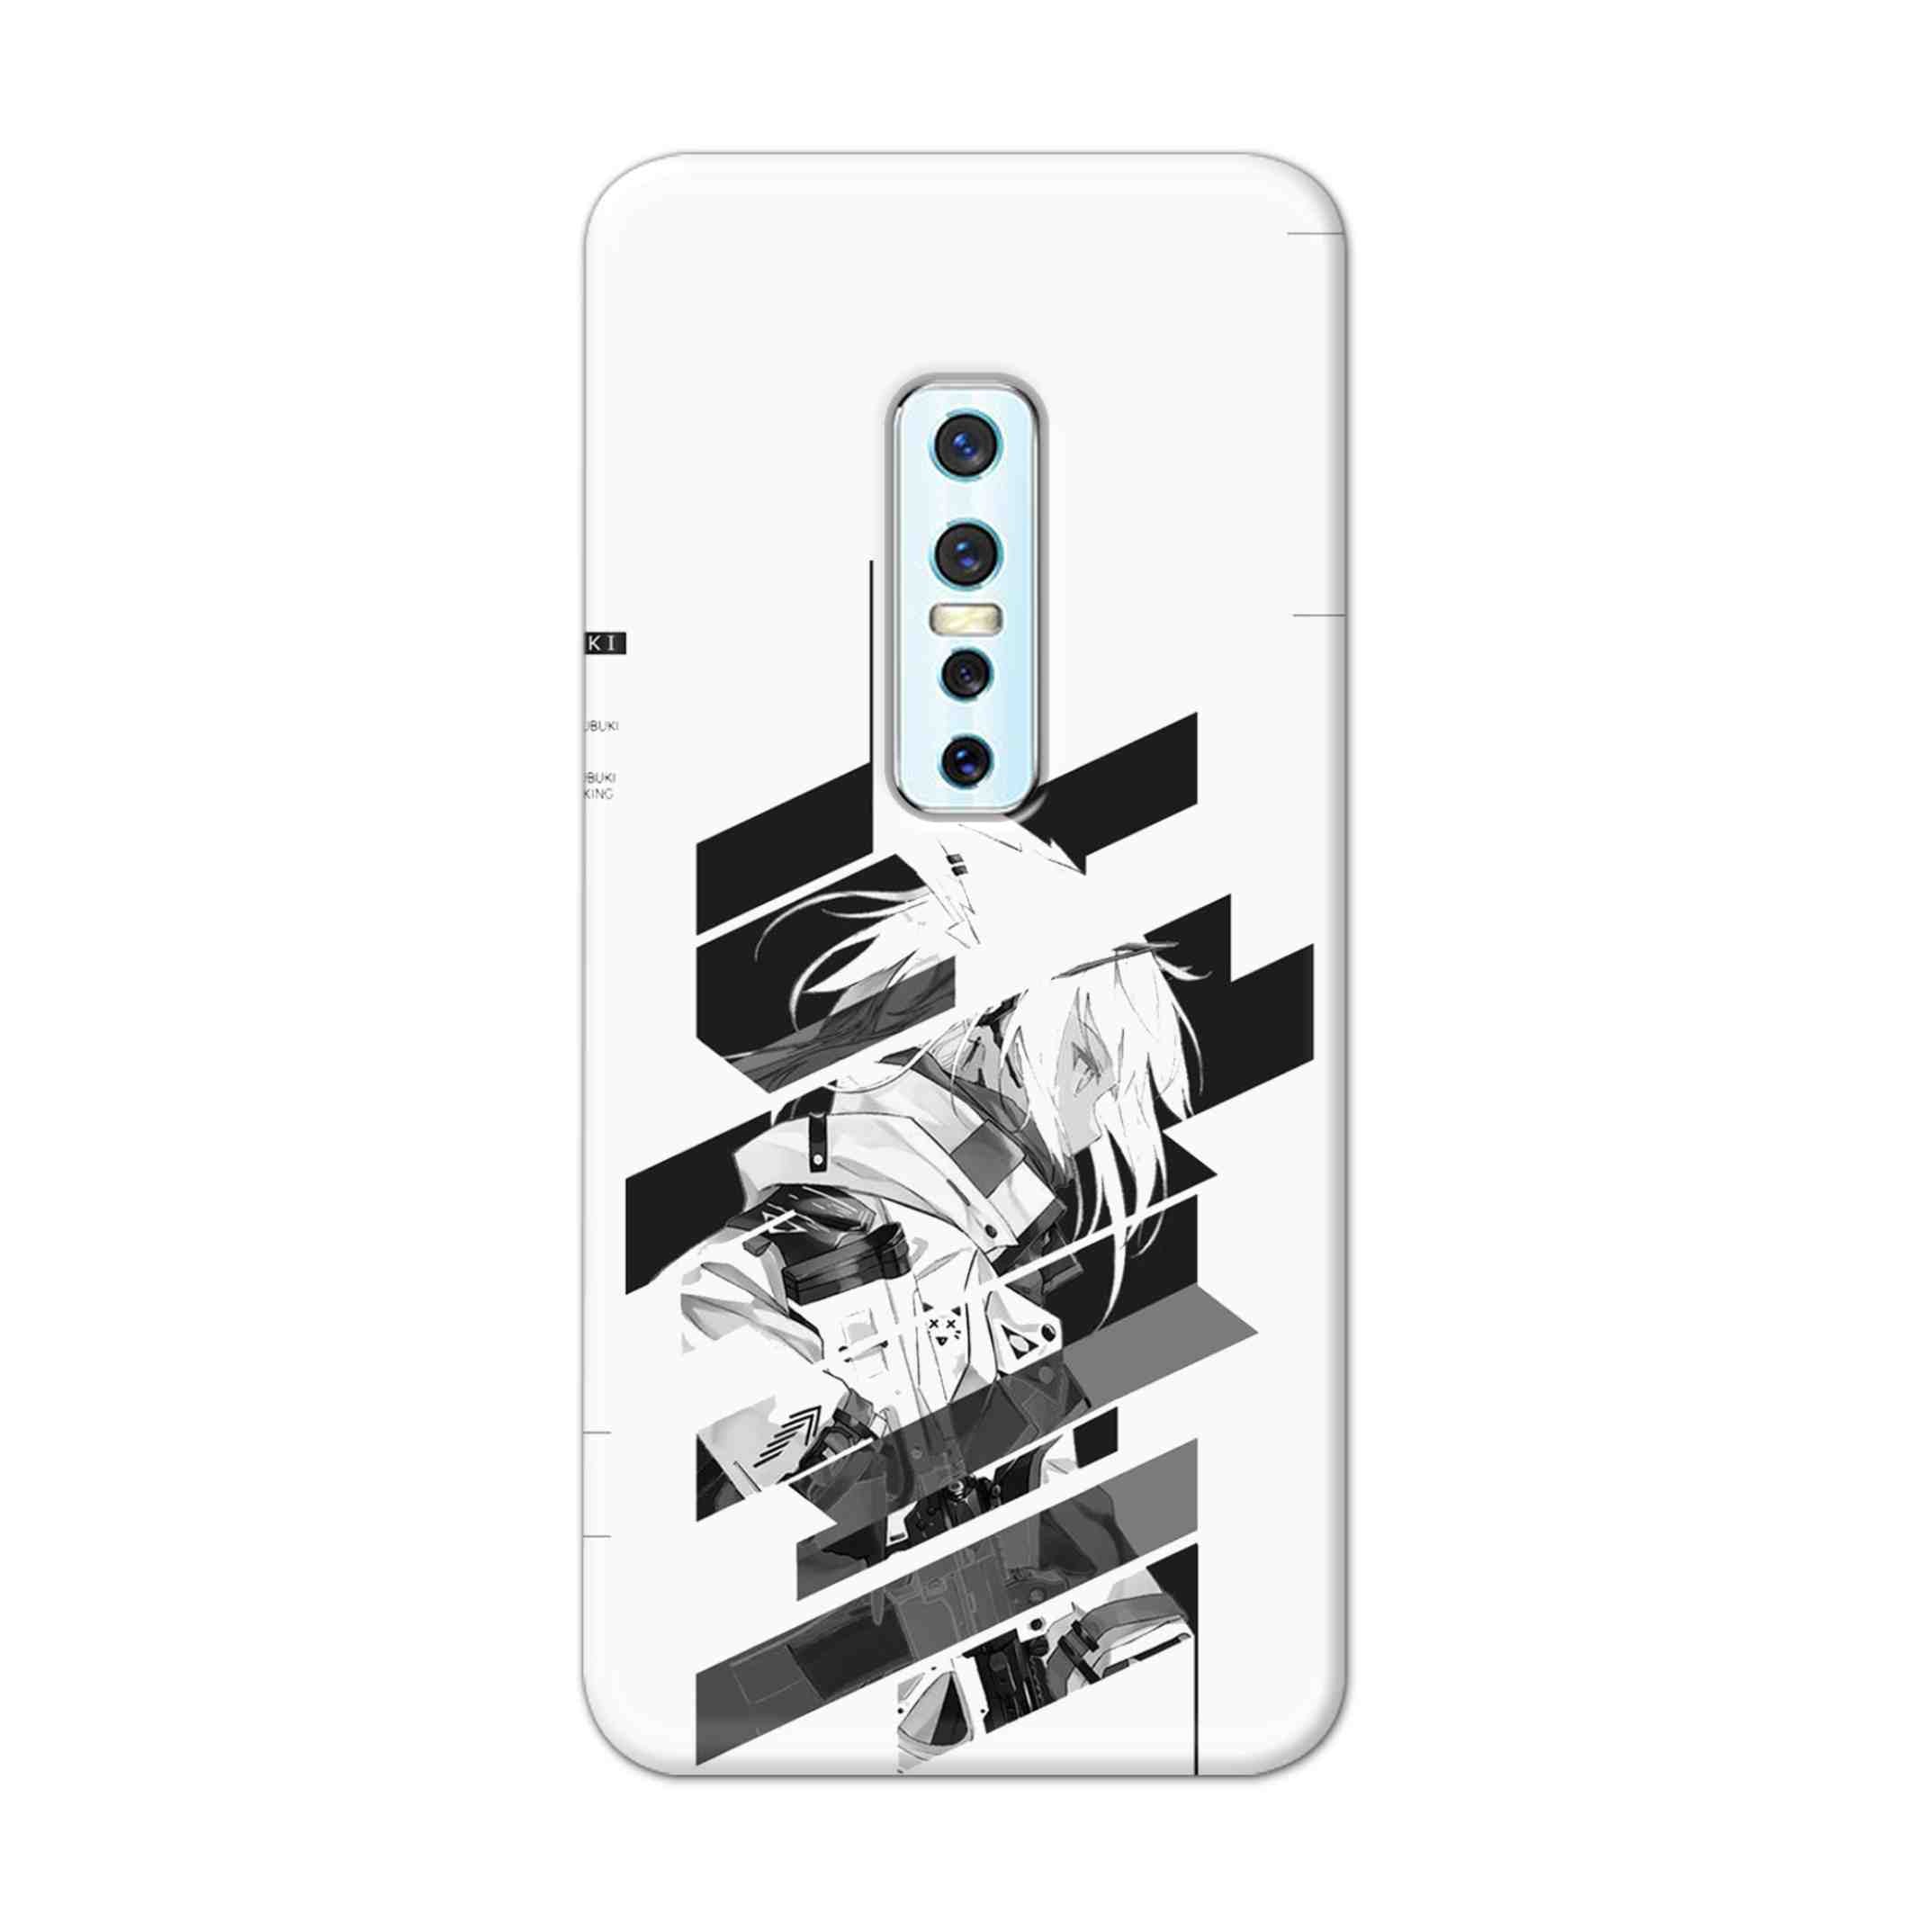 Buy Fubuki Hard Back Mobile Phone Case Cover For Vivo V17 Pro Online